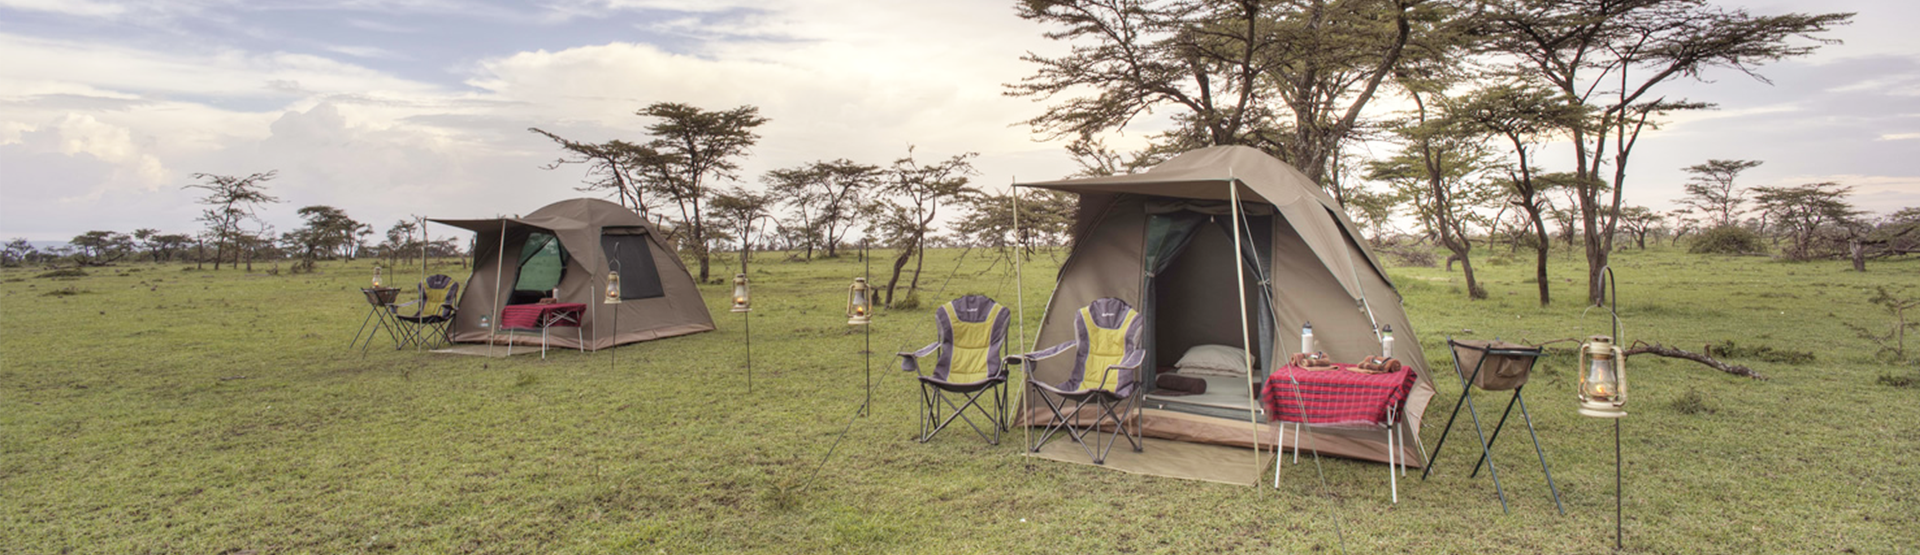 Accommodation during Tanzania Safari